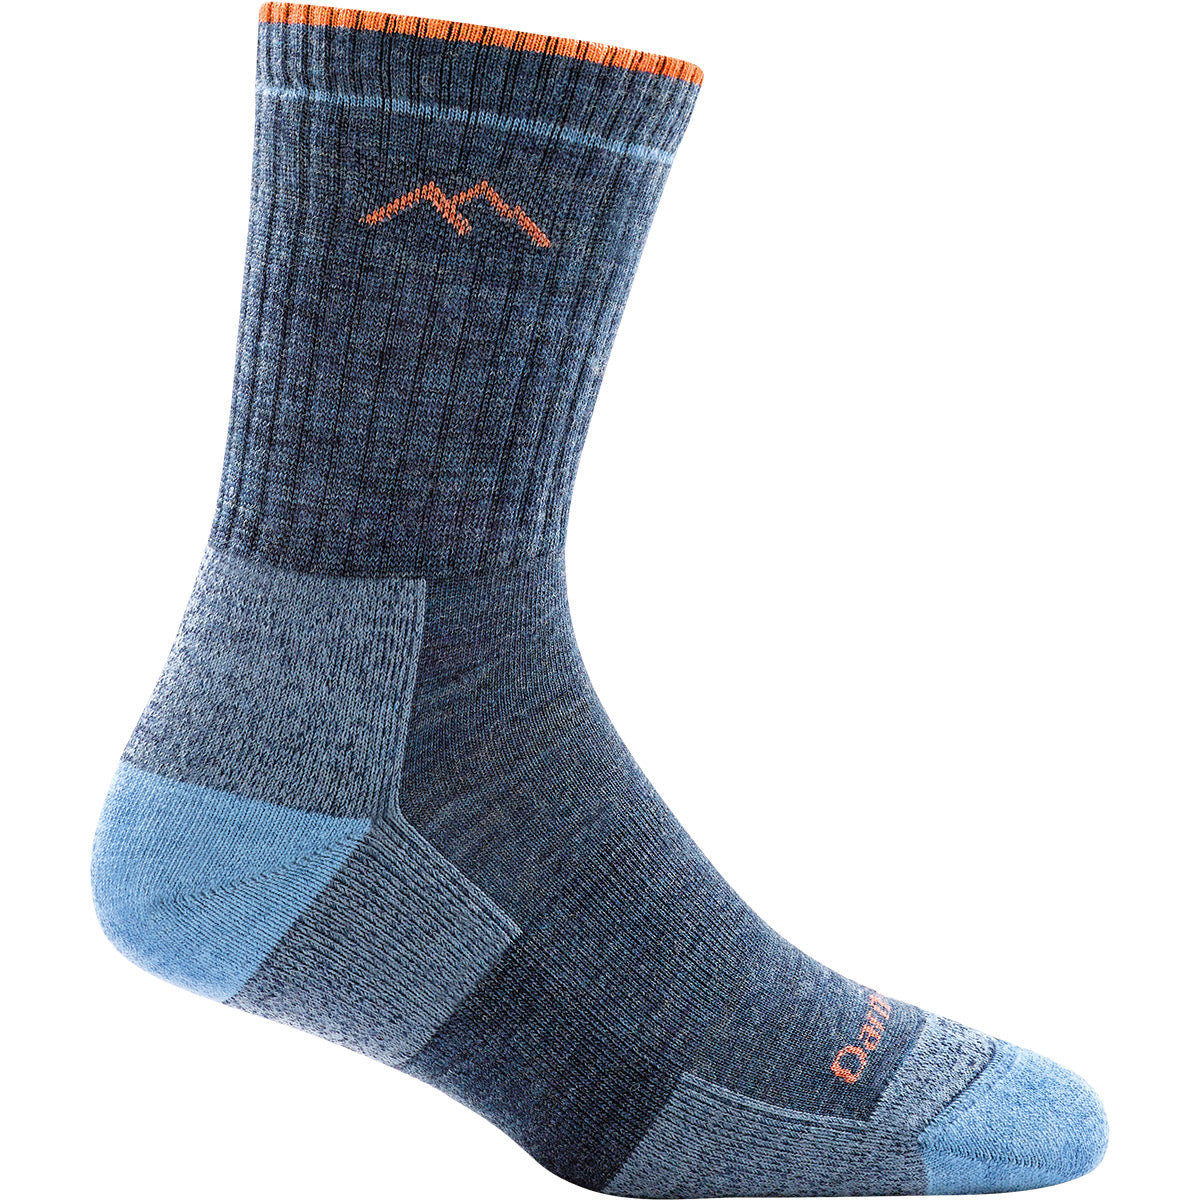 Darn tough denim blue sock with orange mountain outline detail, light blue toe and heel